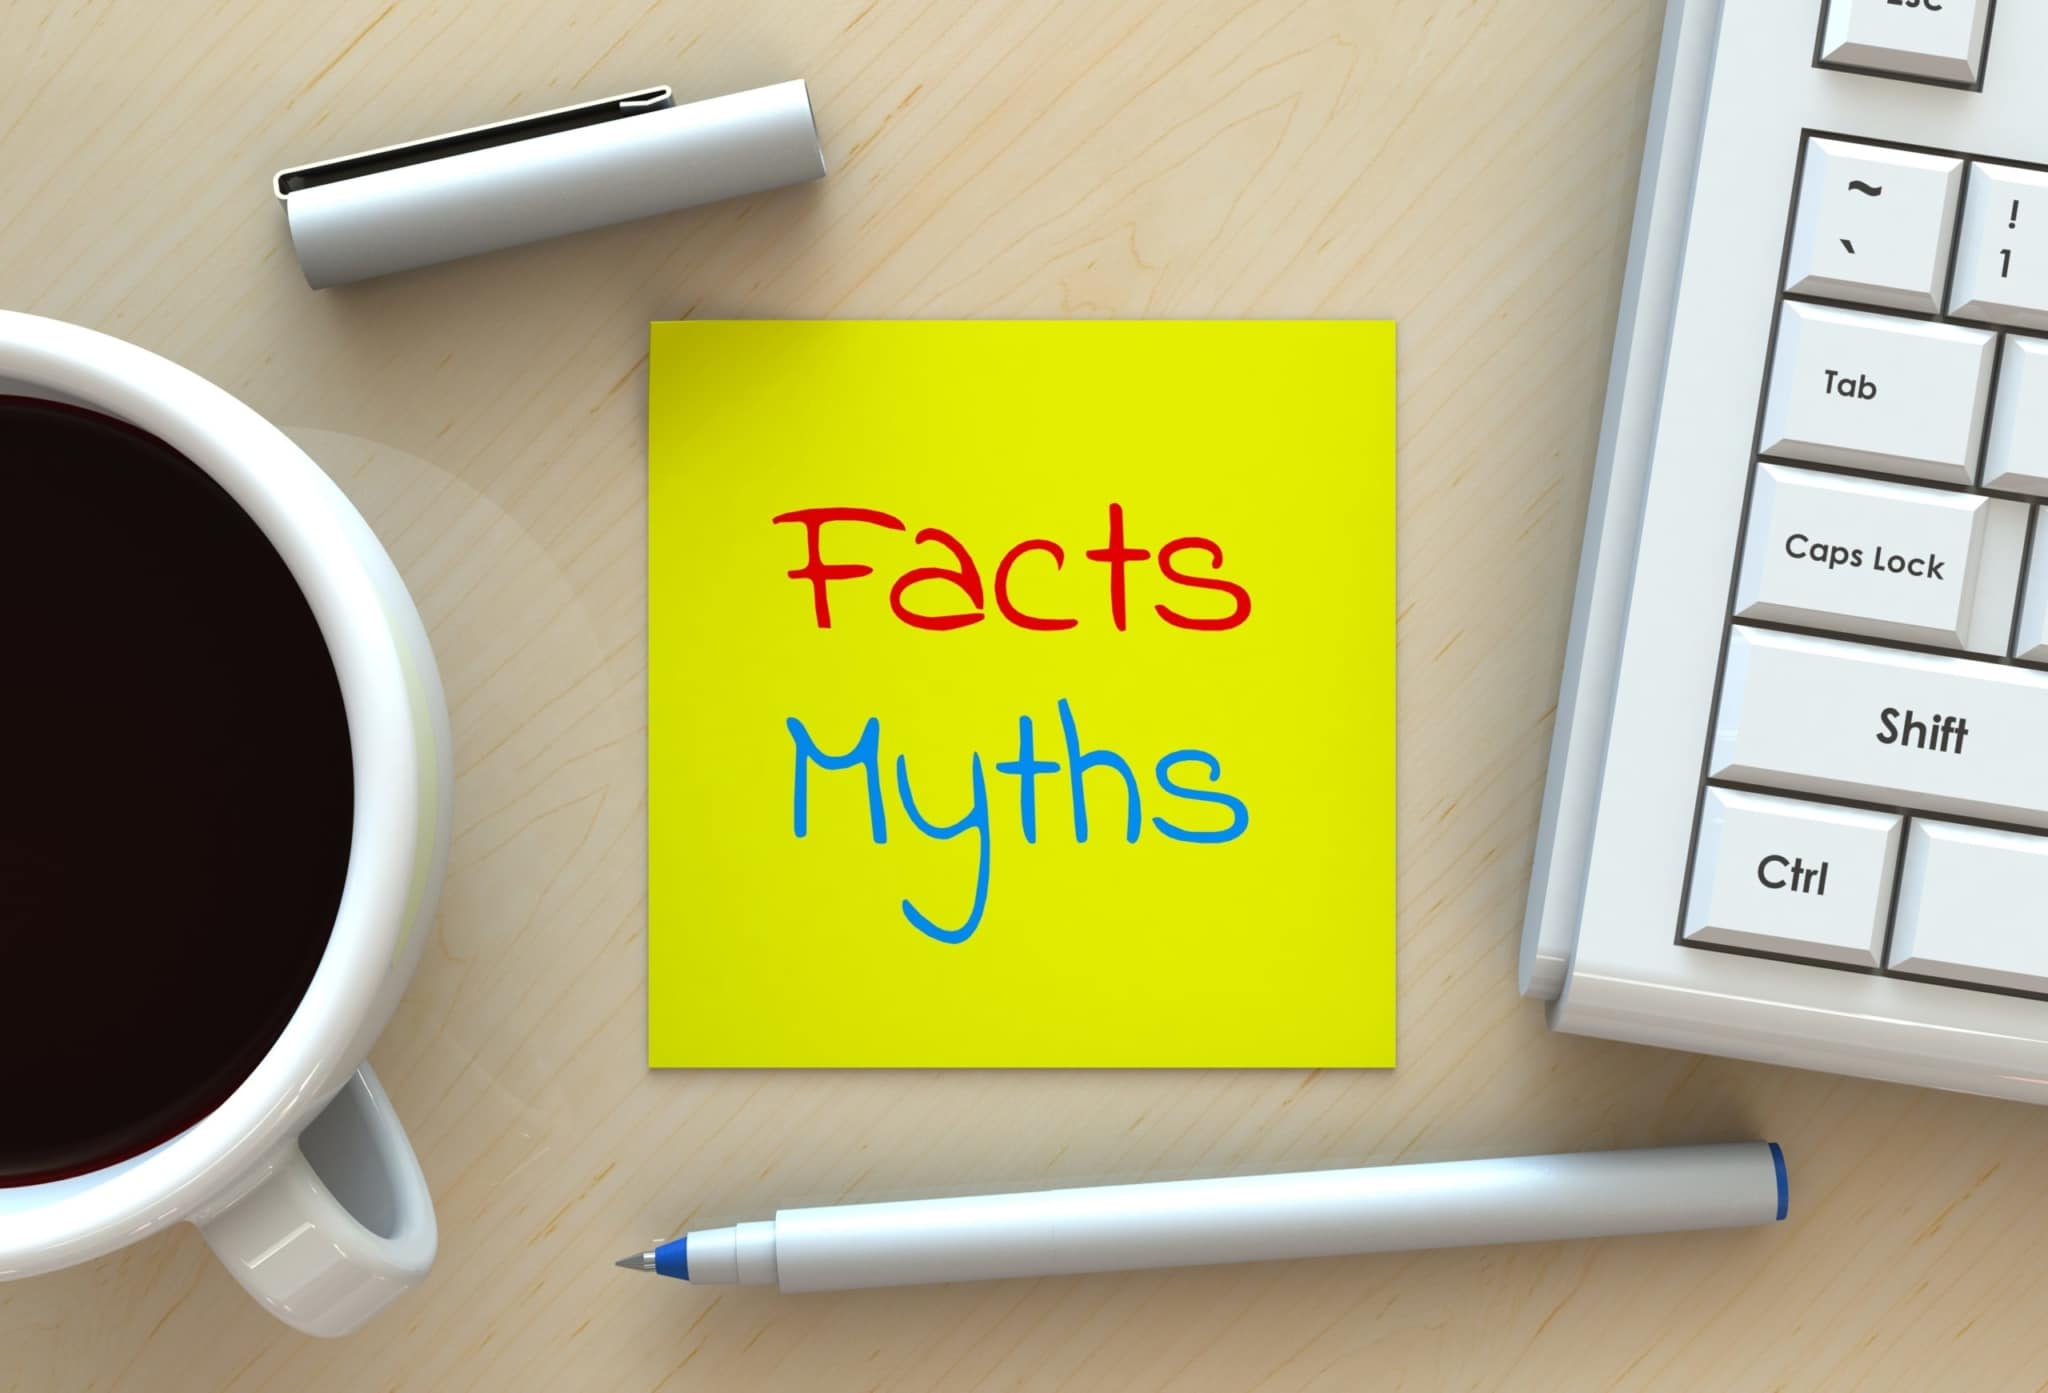 5 IT Myths Debunked